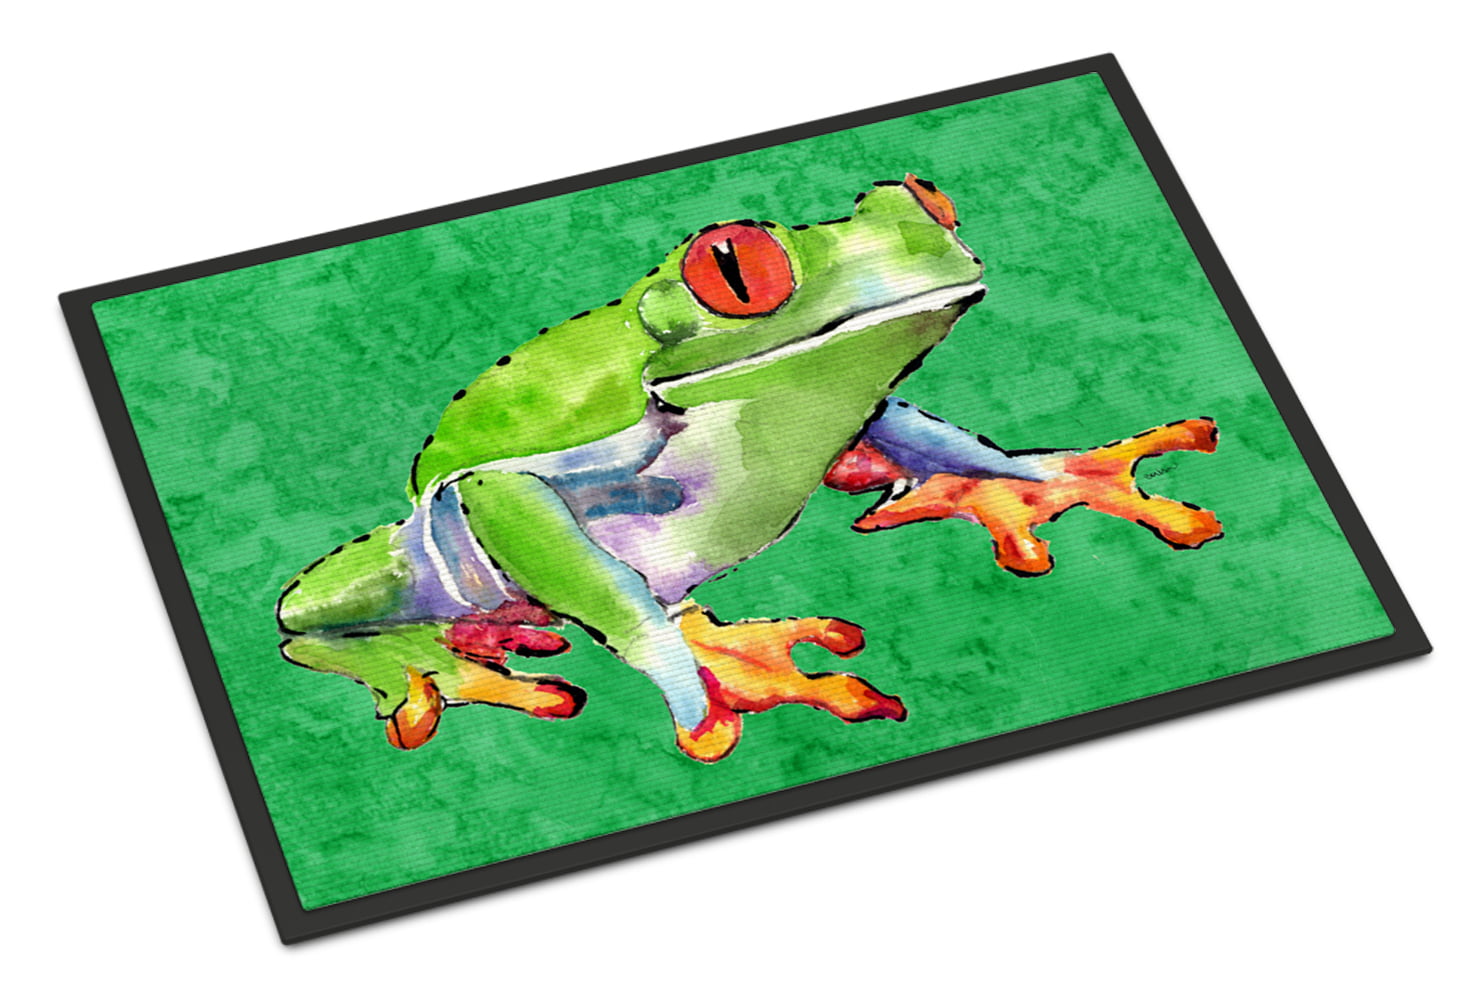 Carolines Treasures Frog Fish Floor Mat 19 x 27 Multicolor 